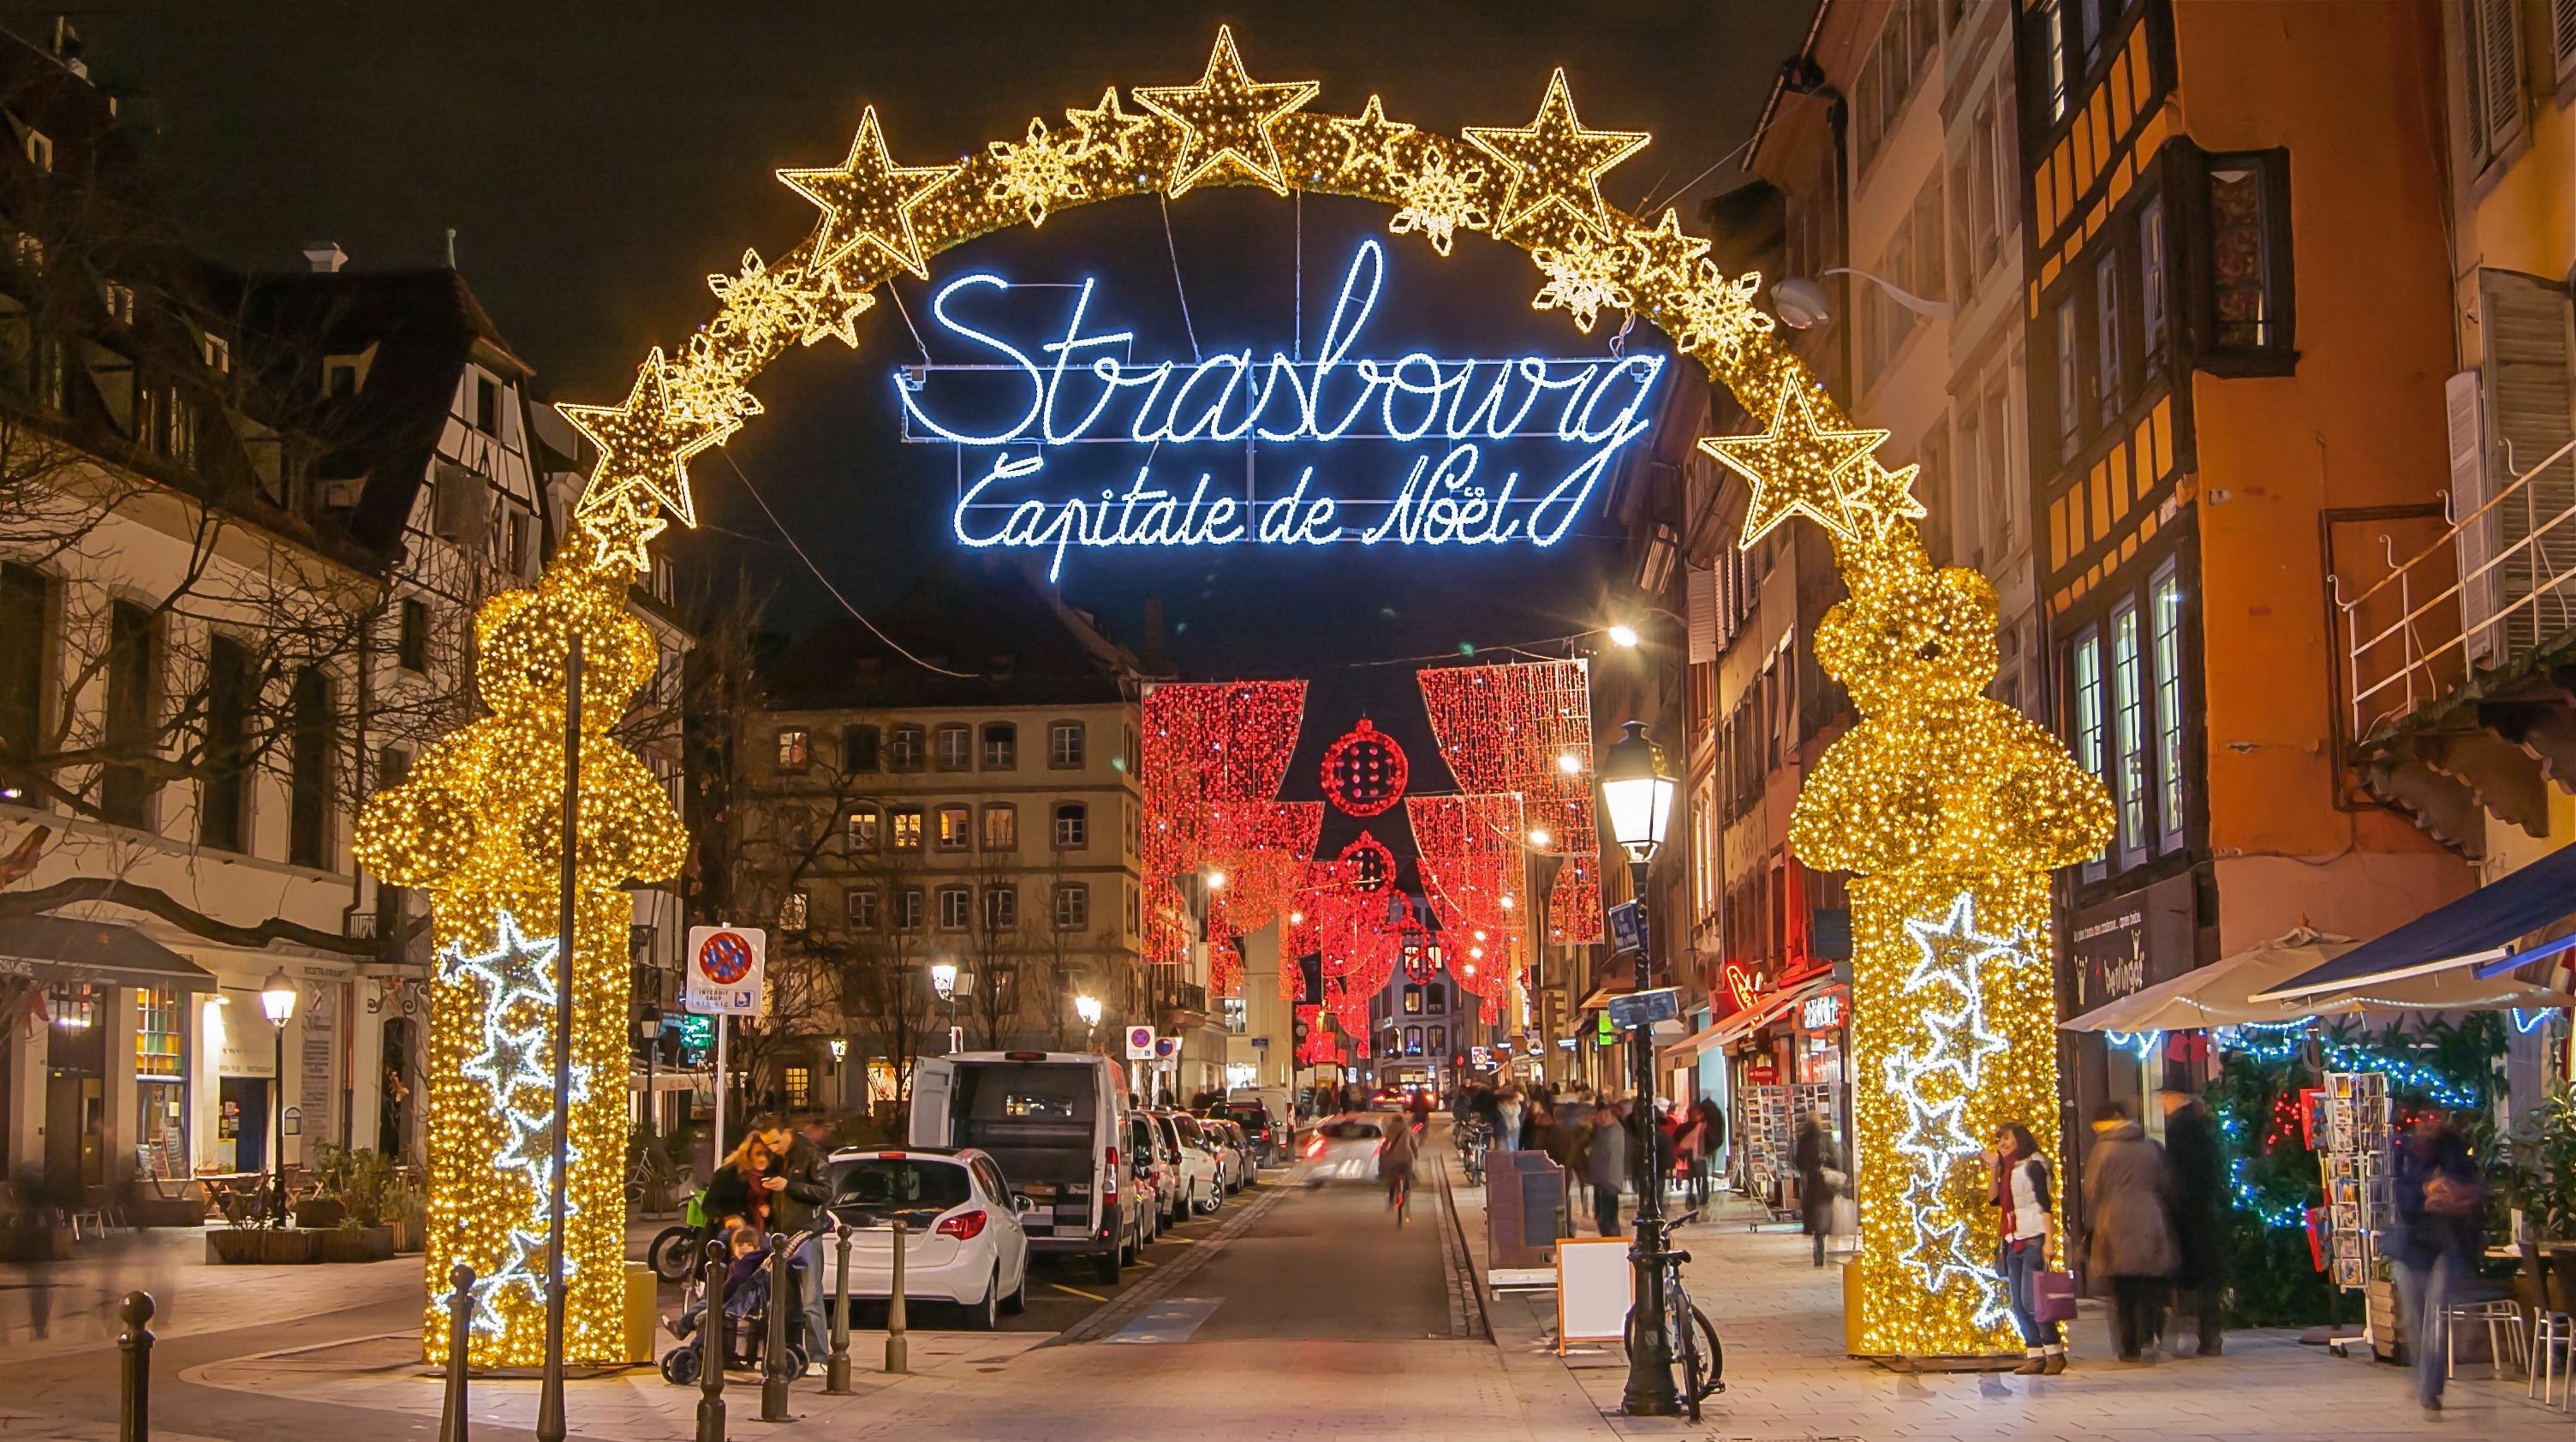 Marché de Noël à Strasbourg, France © Alexi Tauzin - stock.adobe.com